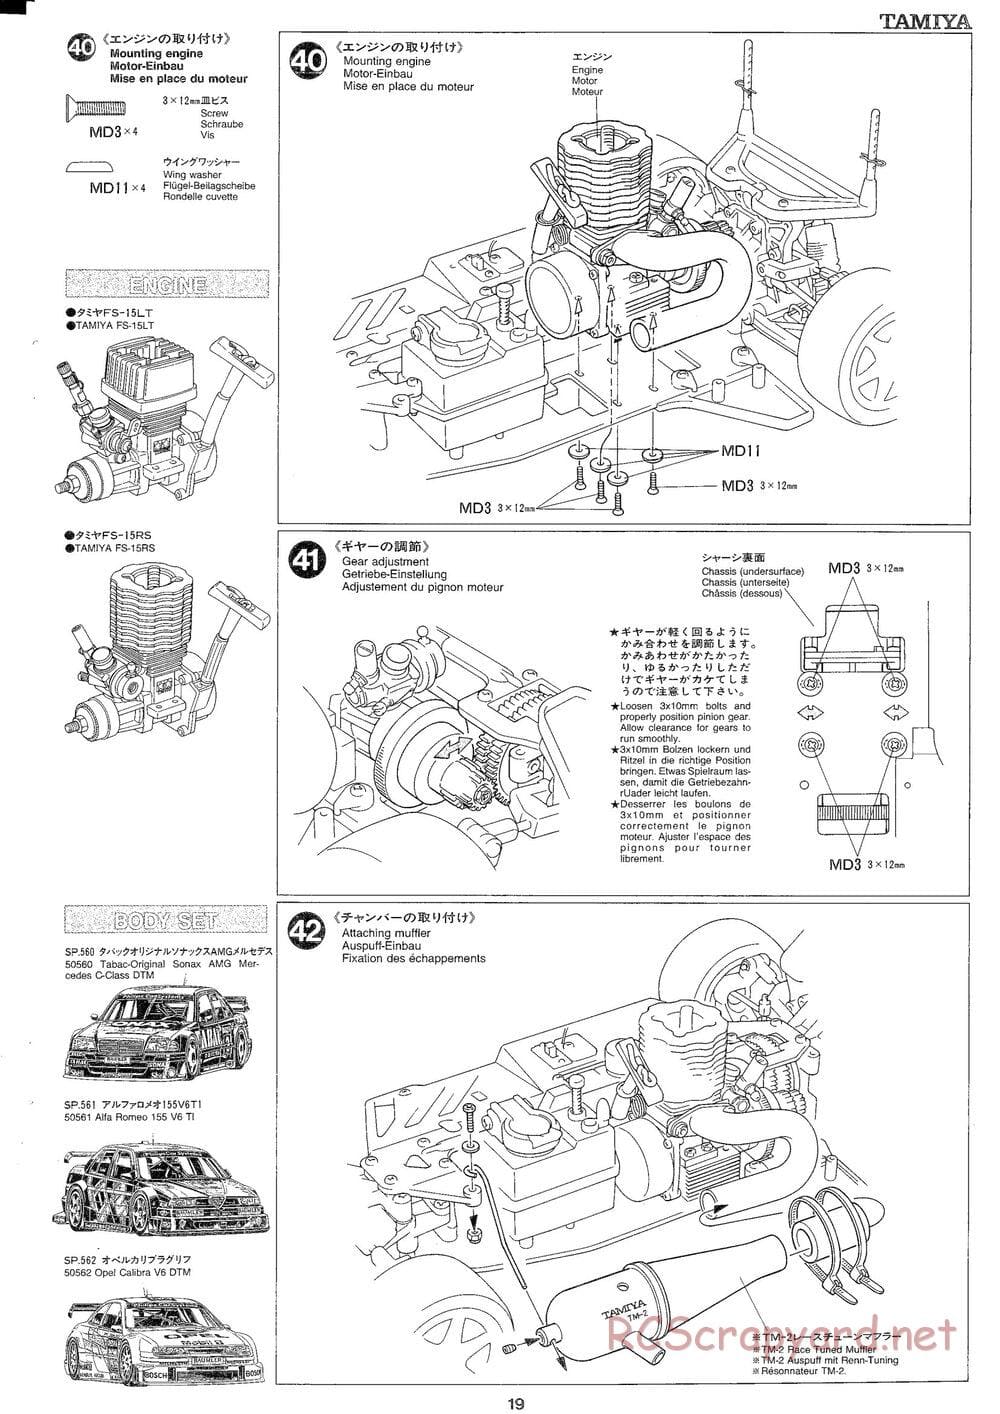 Tamiya - TGX Mk.1 TRF Special Chassis - Manual - Page 19